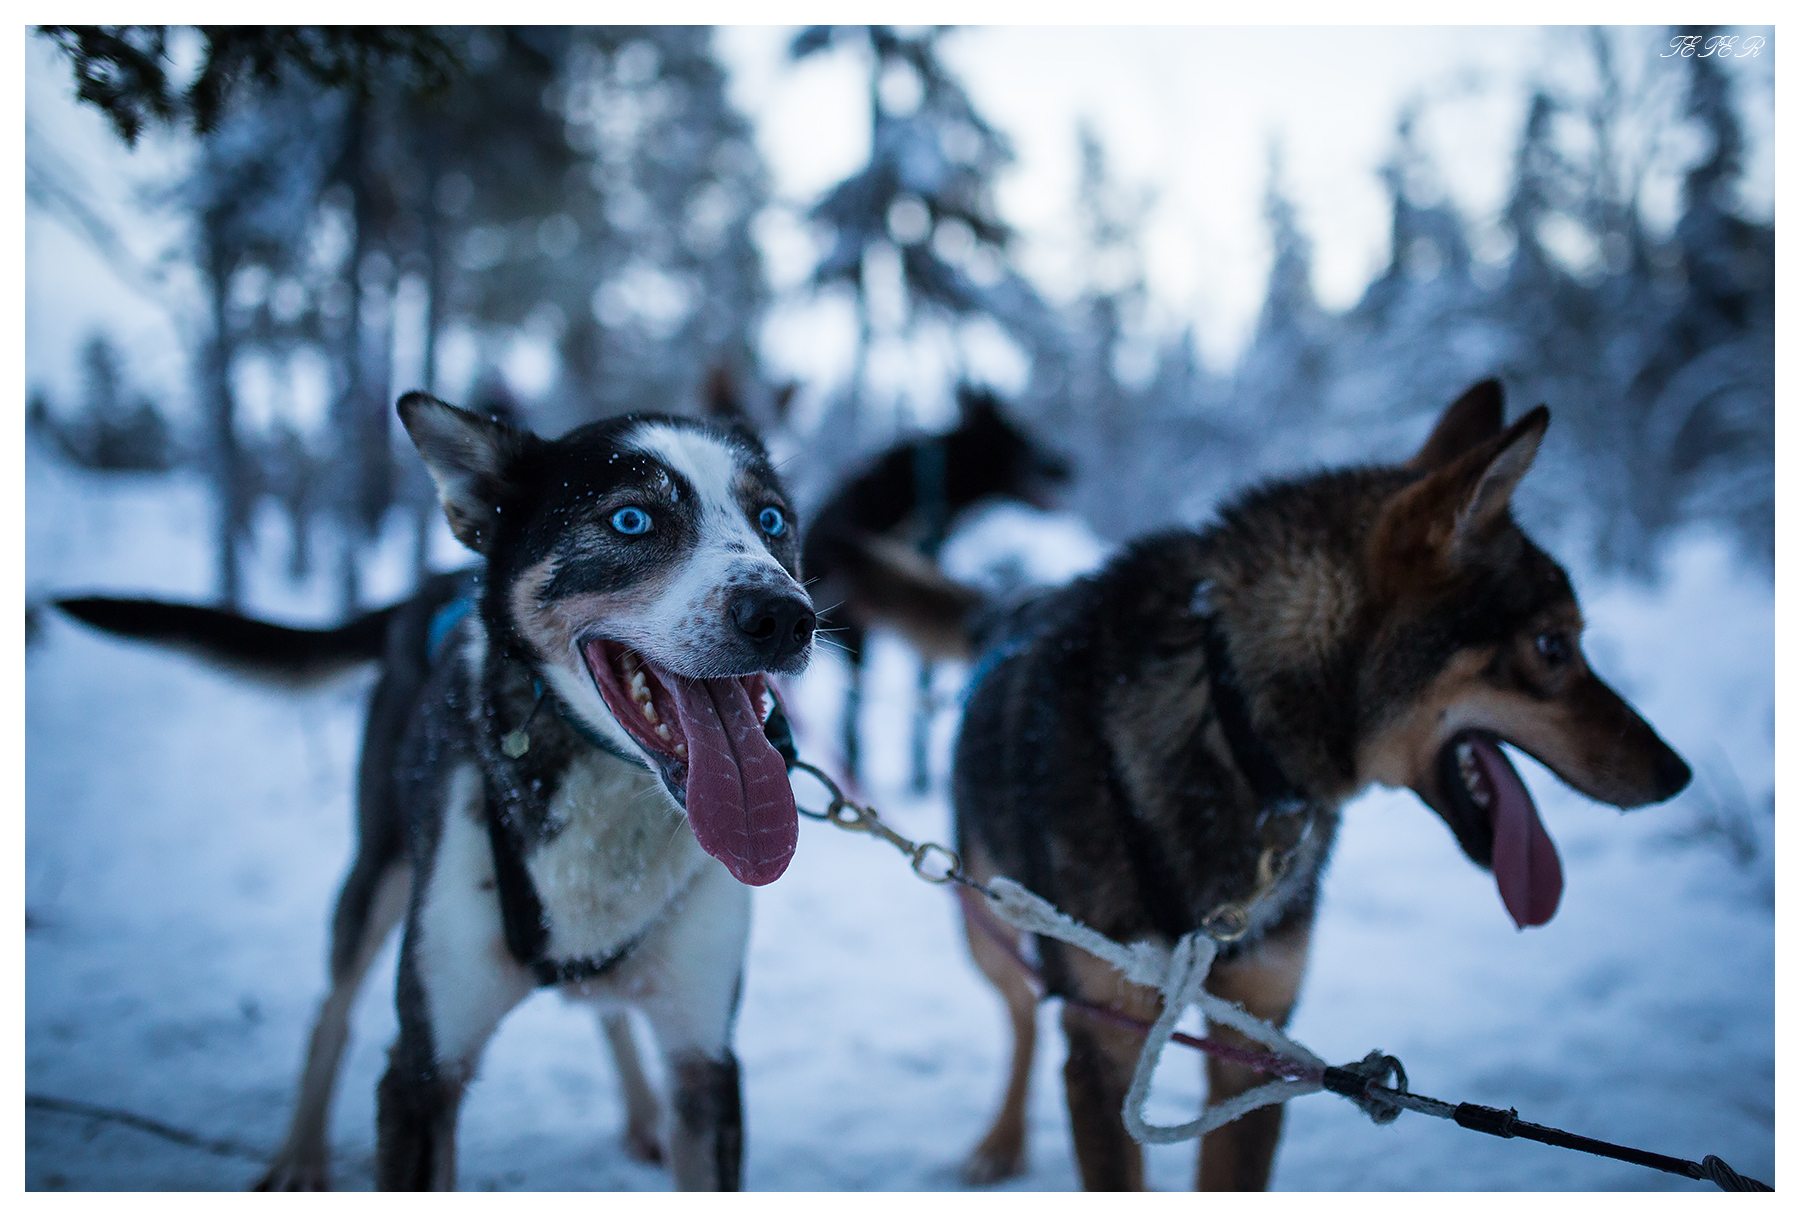 Husky dogs in Sweden...